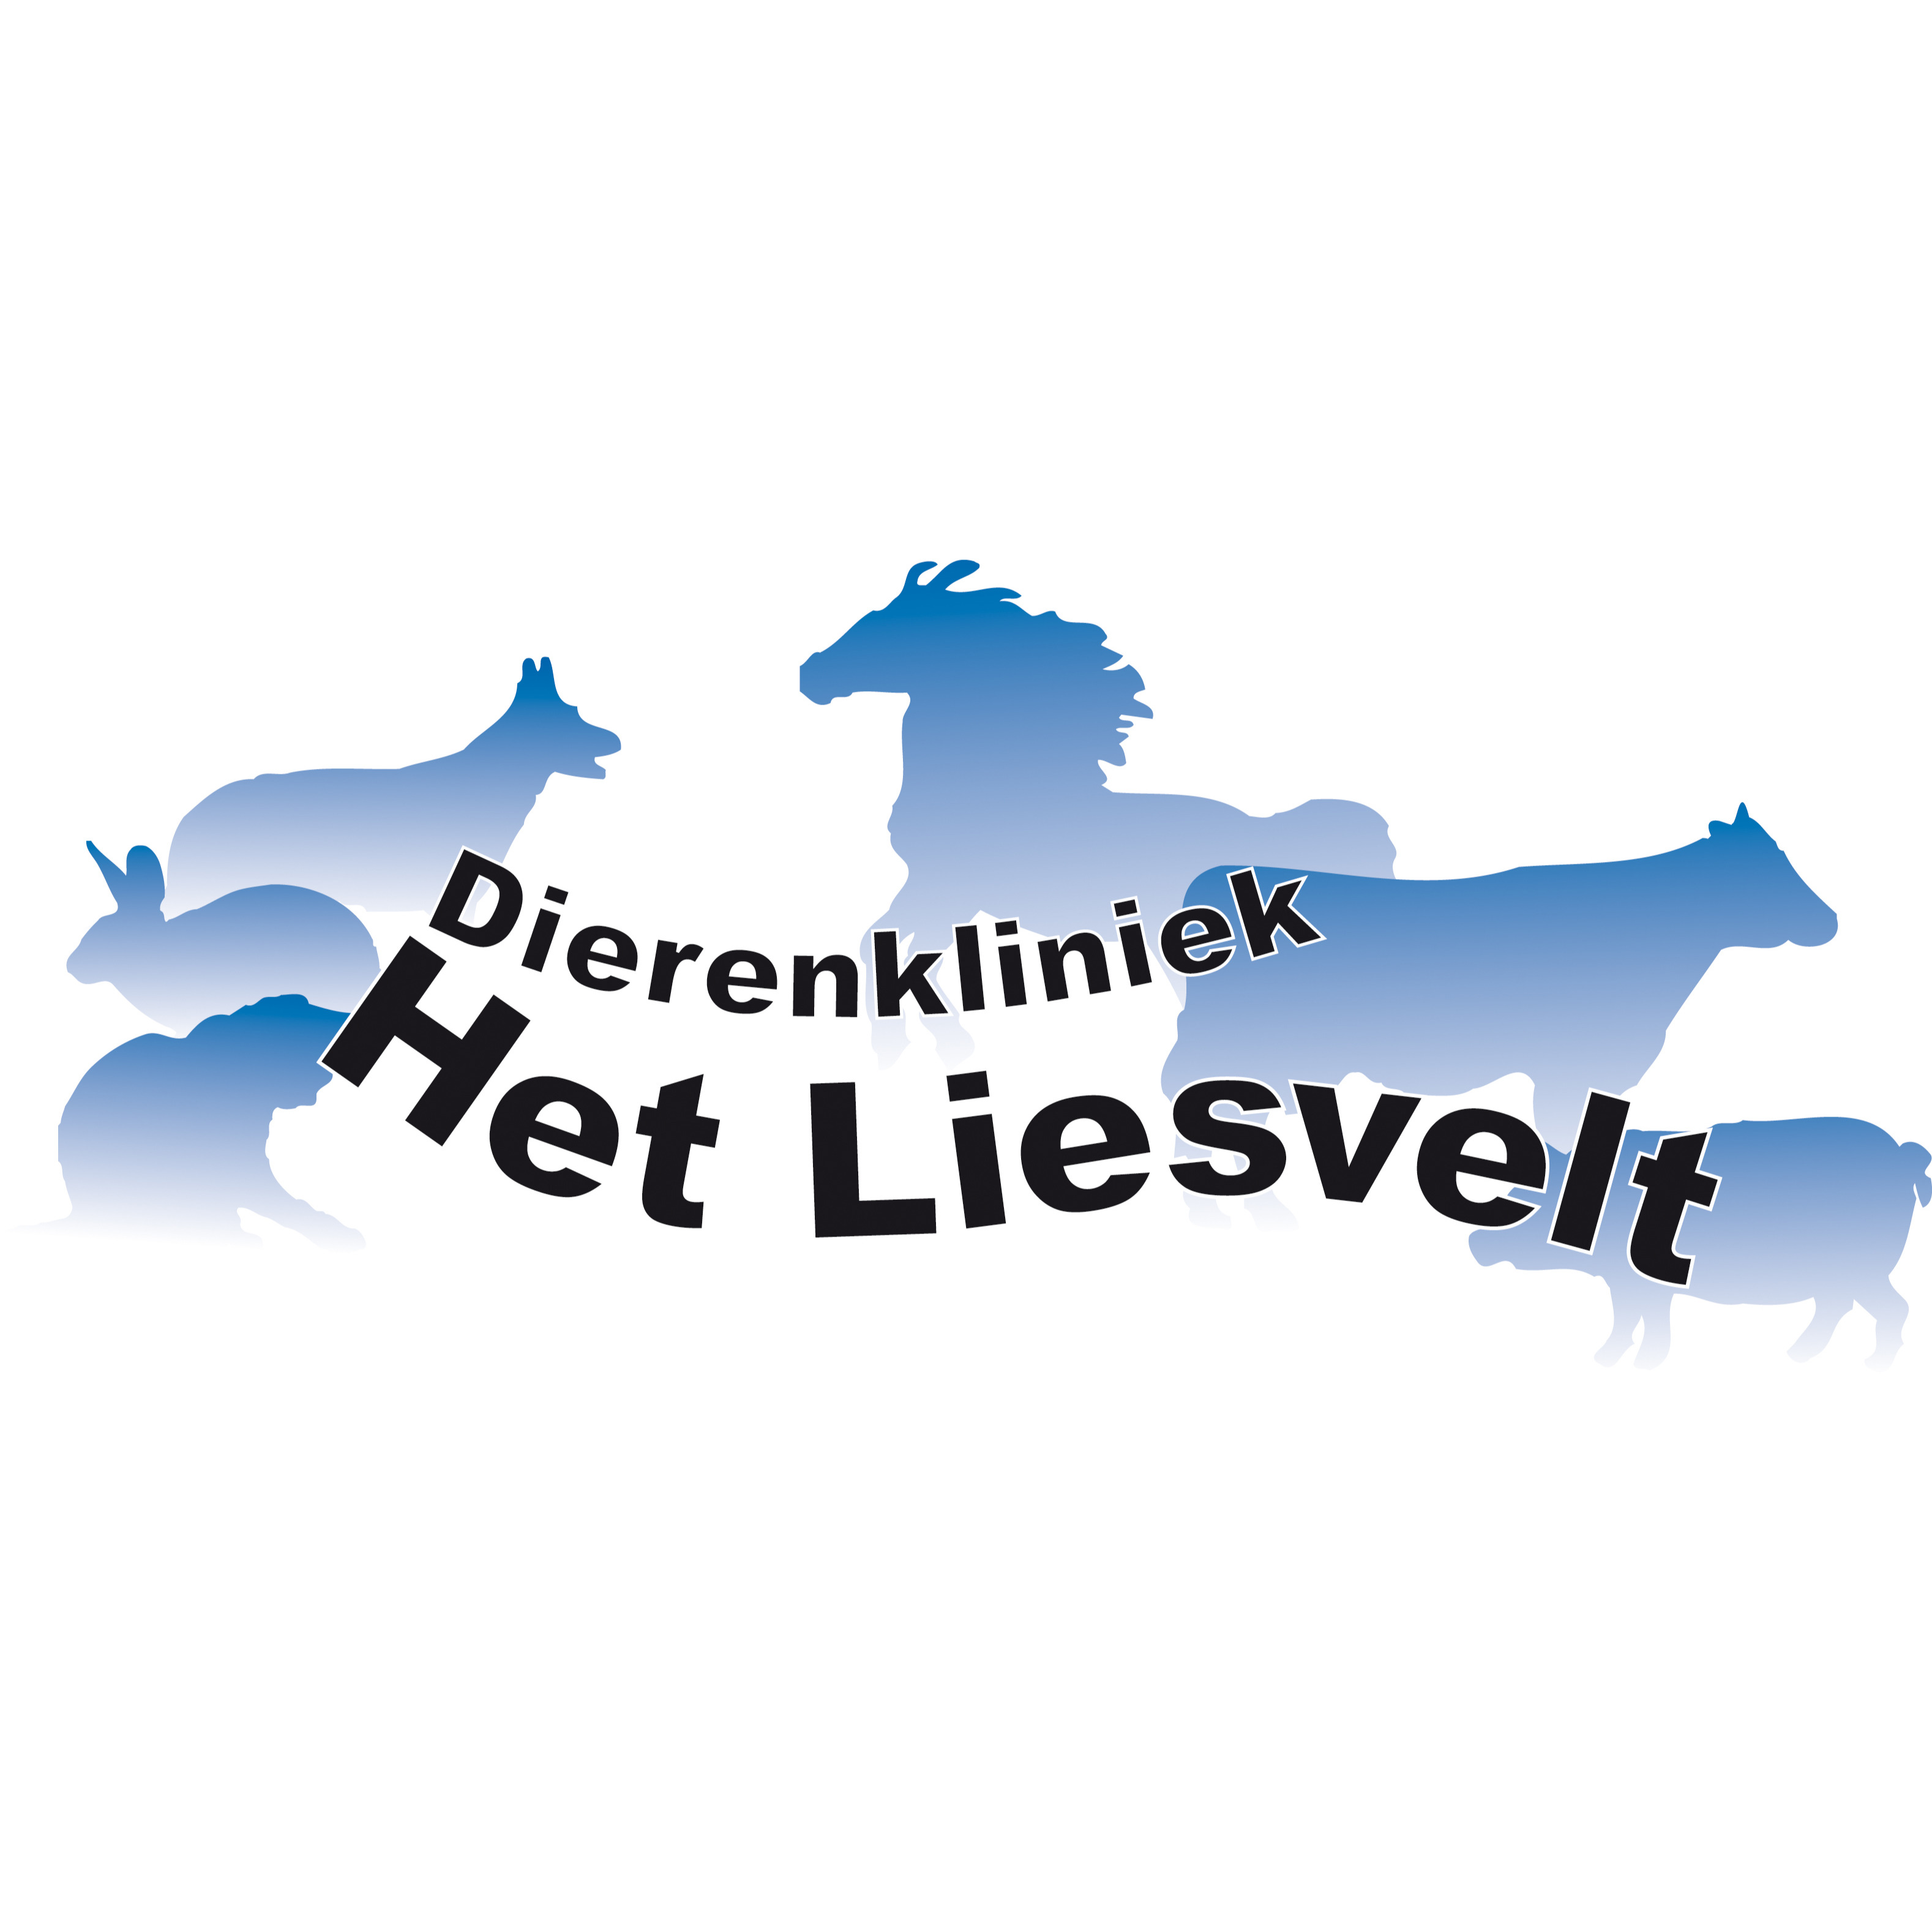 Dierenkliniek Het Liesvelt Logo